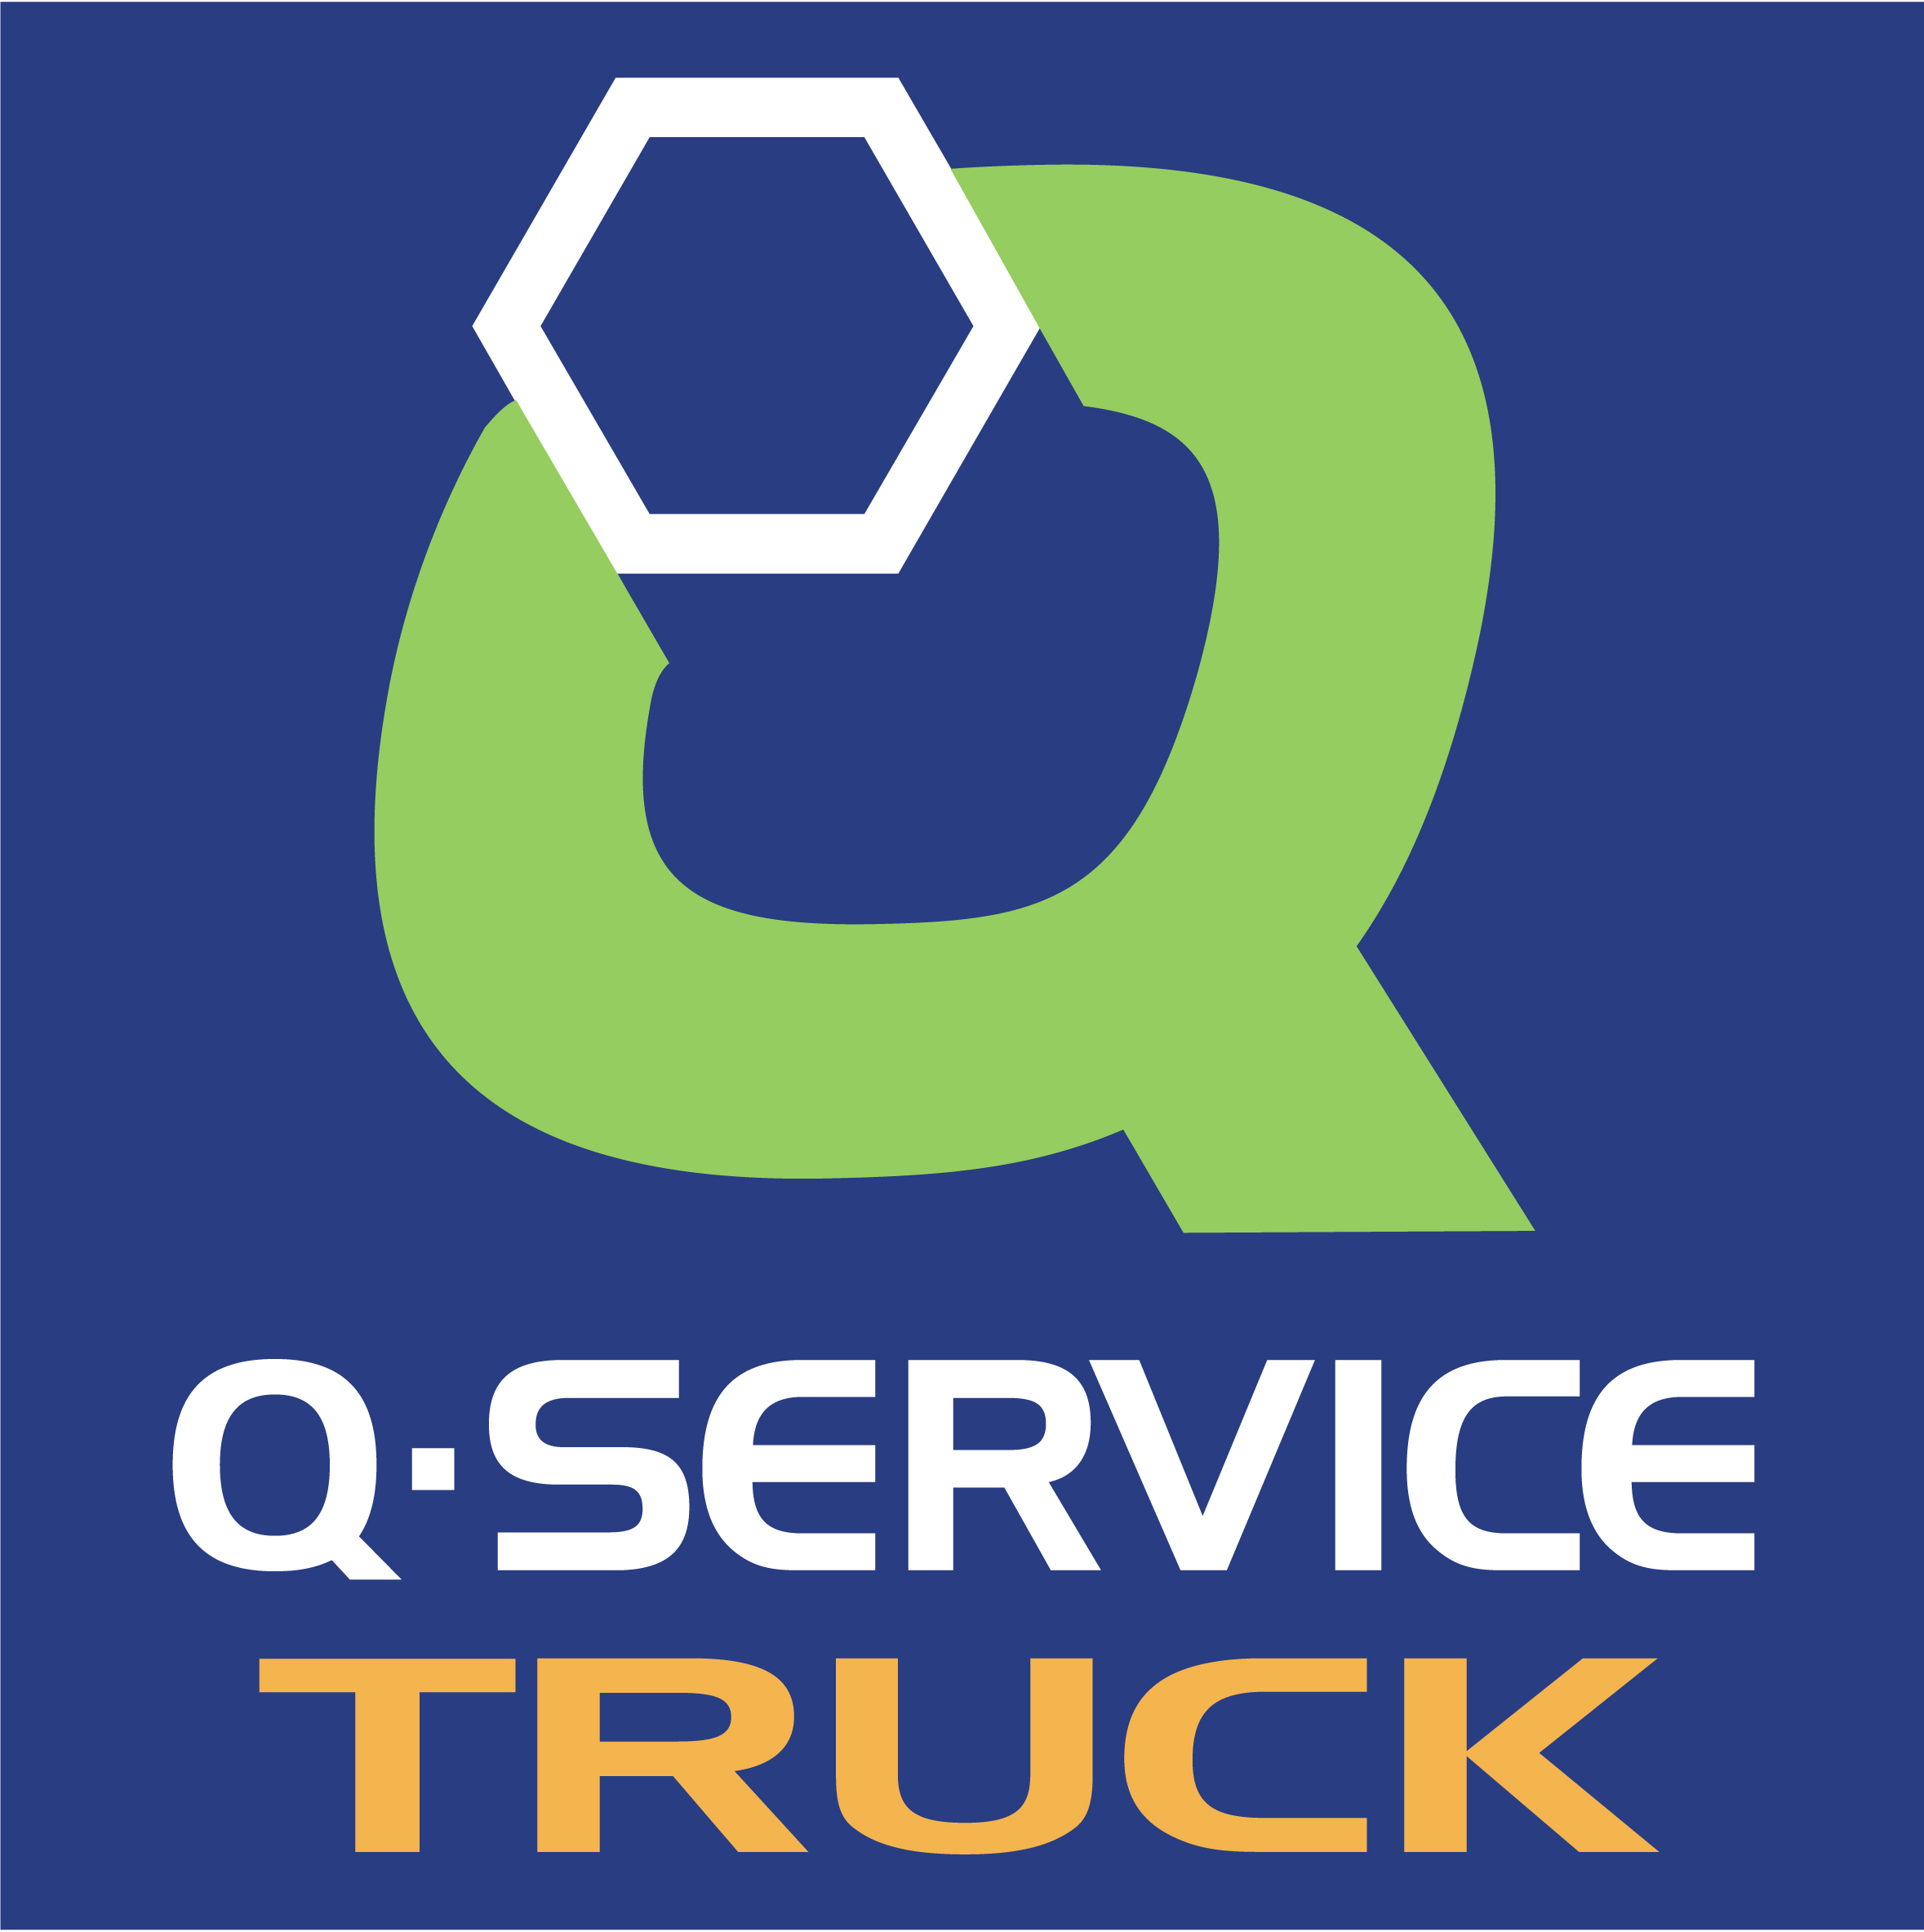 Q-SERVICE truck logo